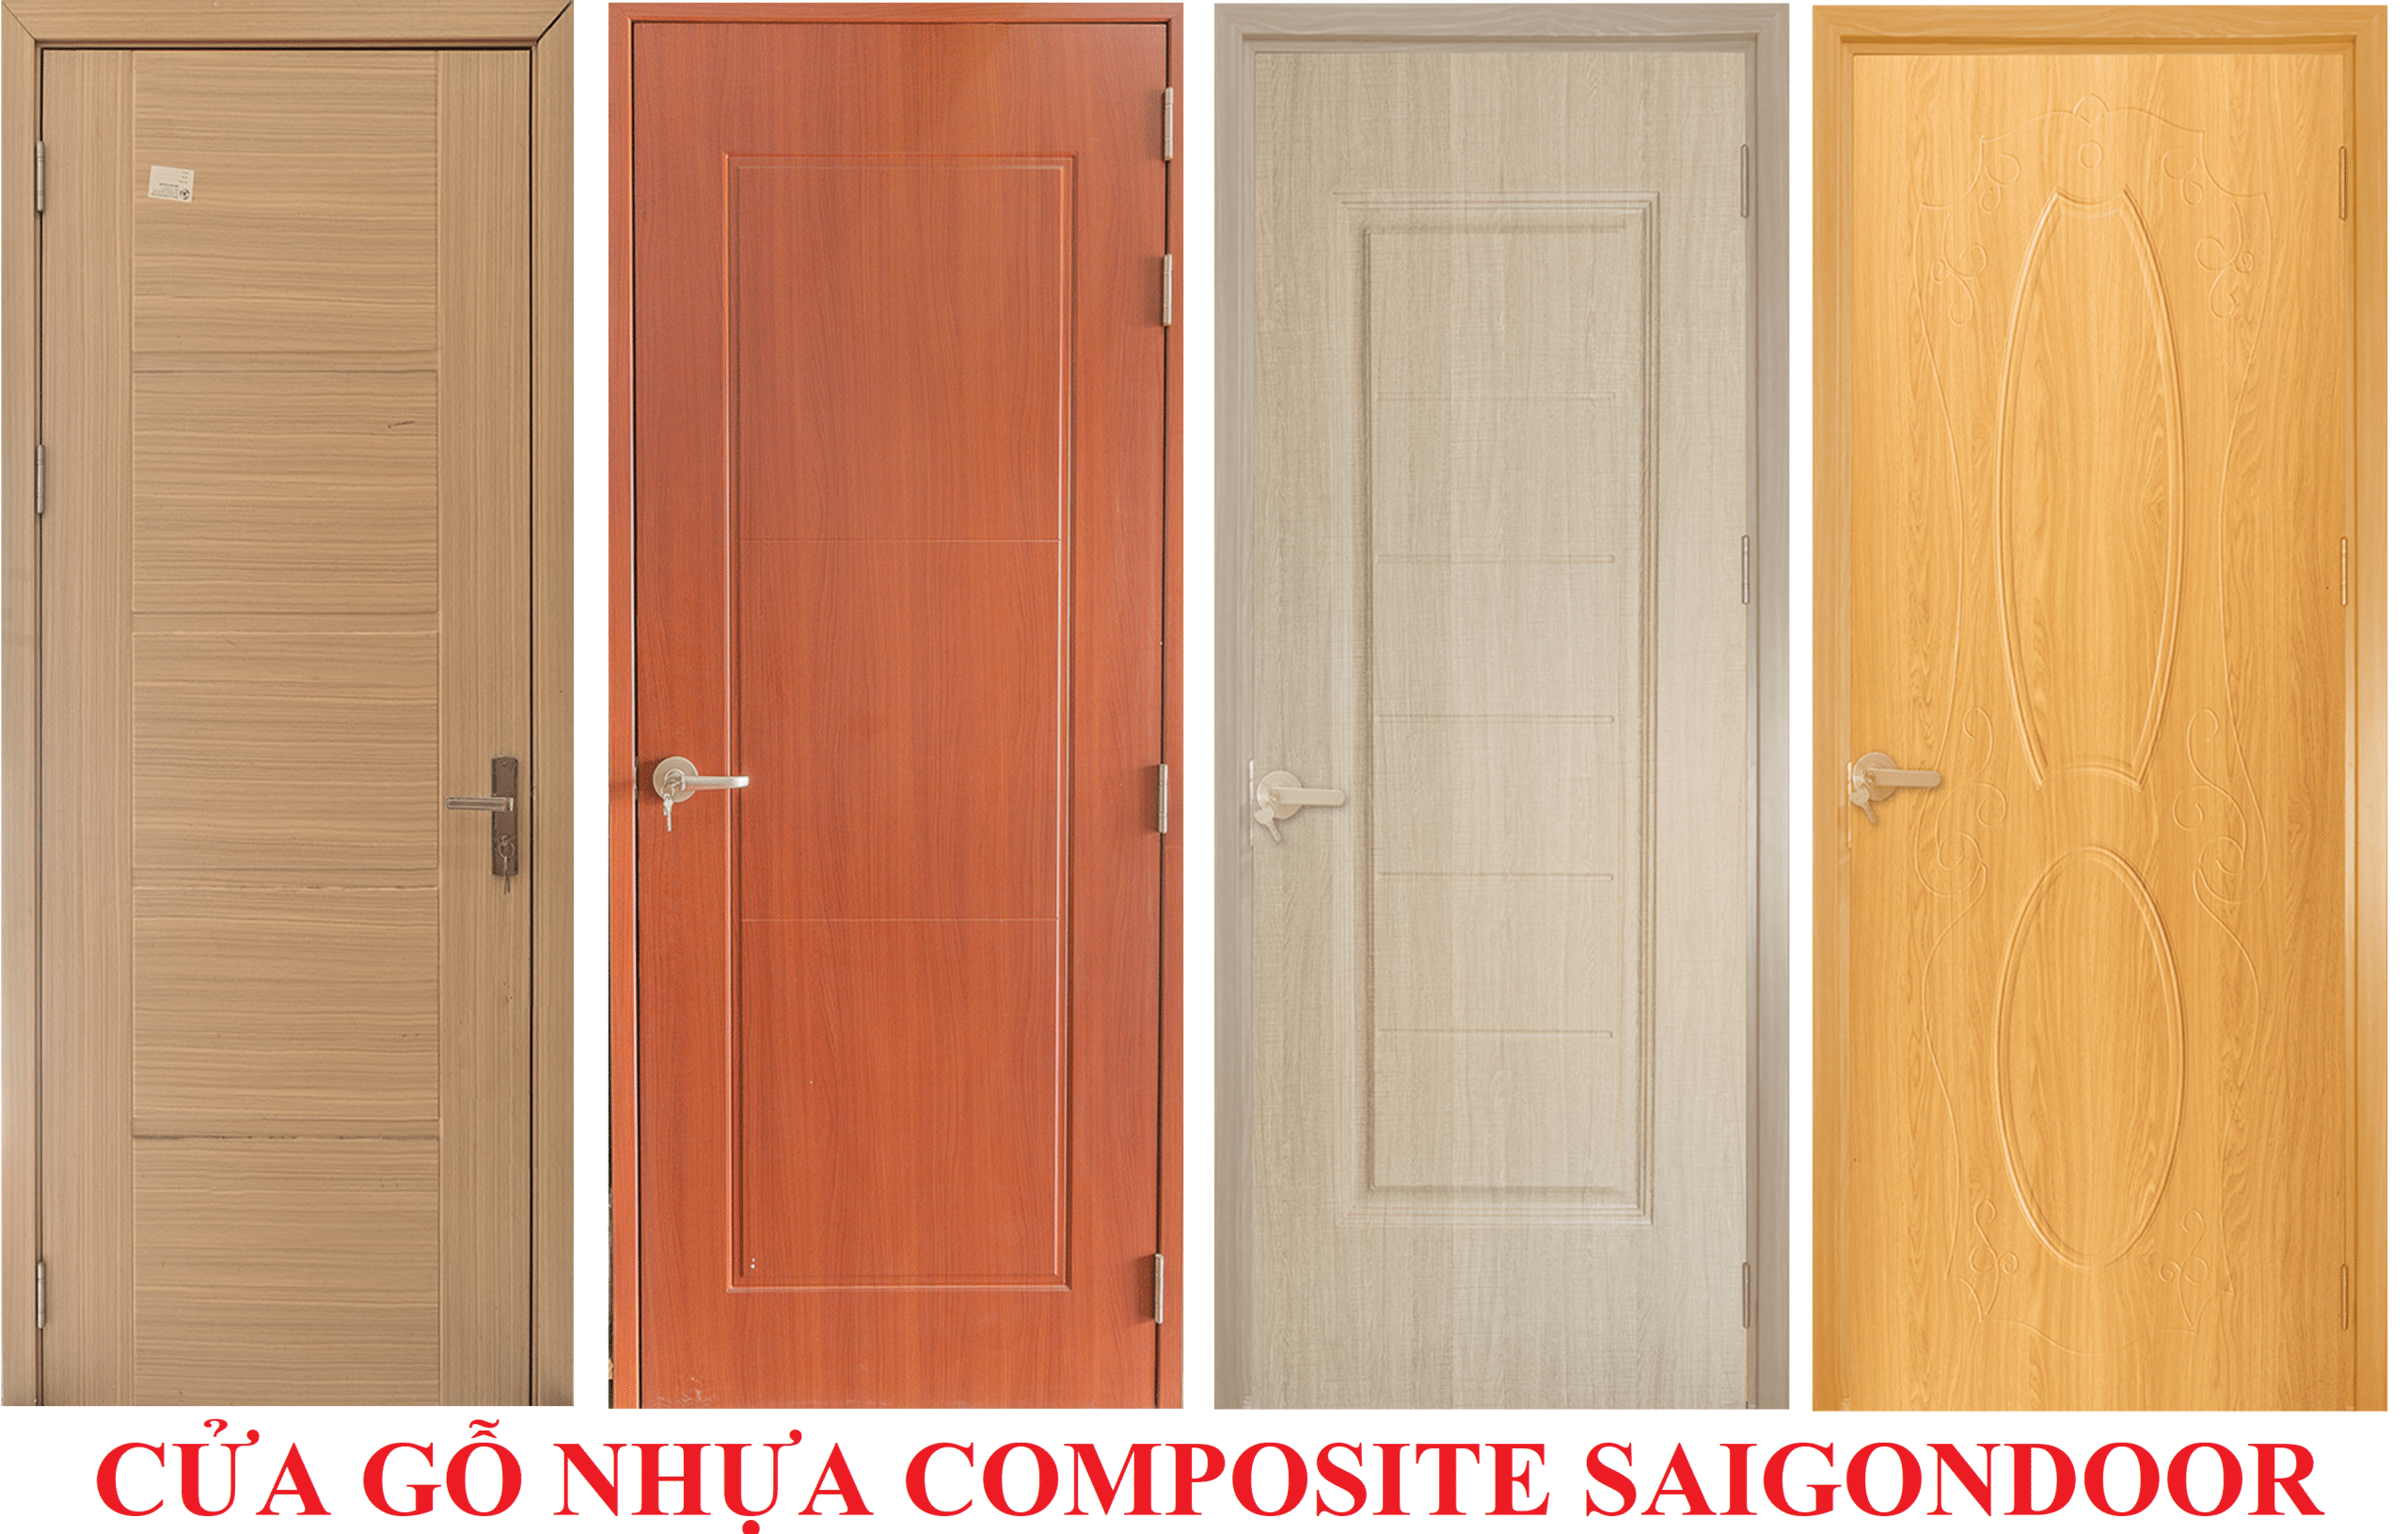 cửa nhựa gỗ composite SaiGonDoor